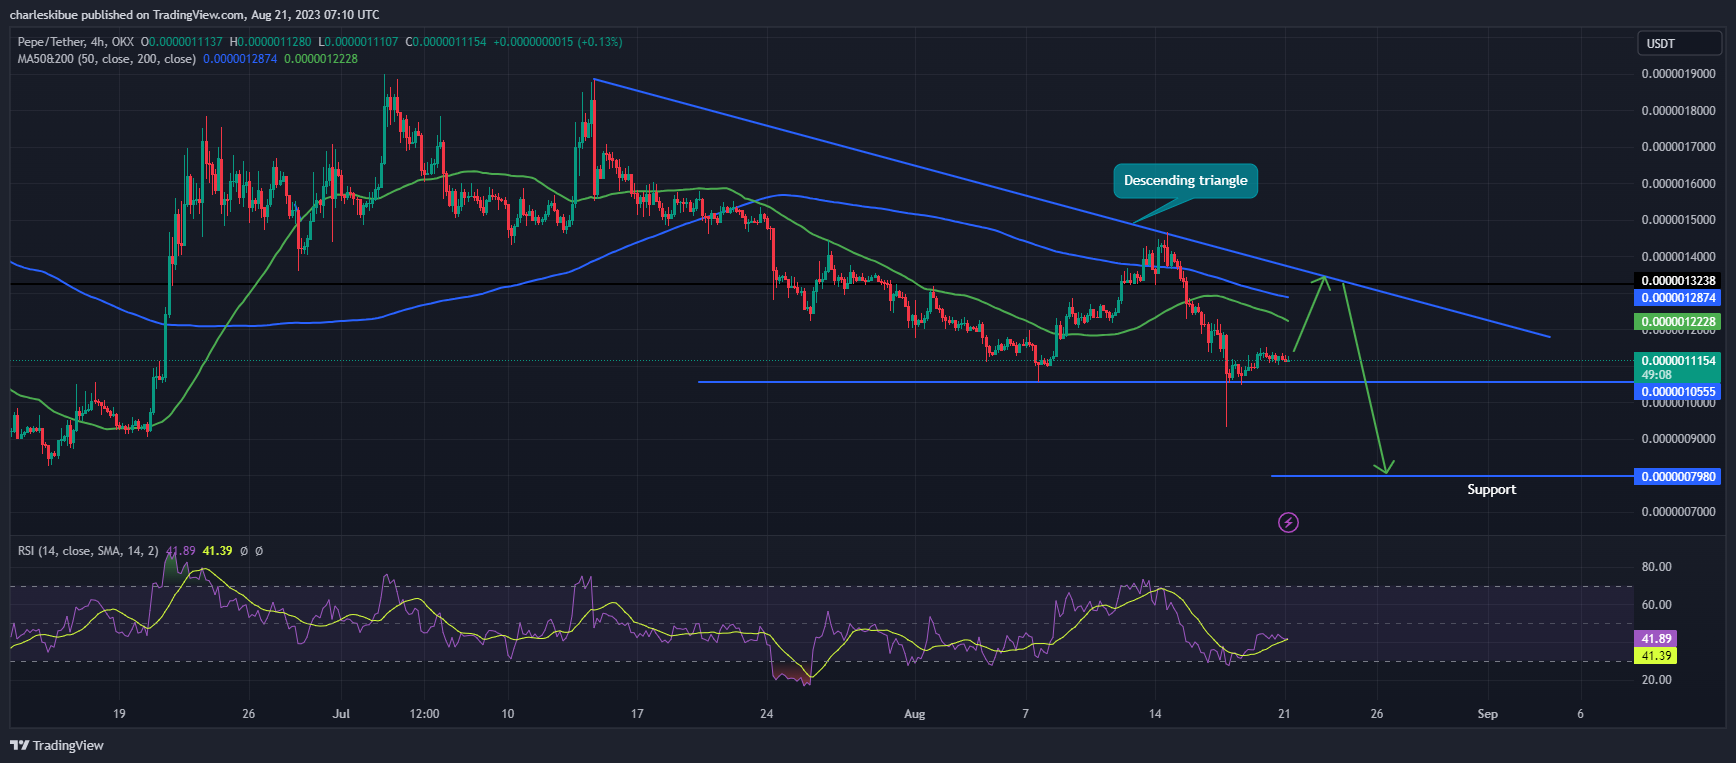 PEPE/USDT Chart Analysis. Tradingview.com